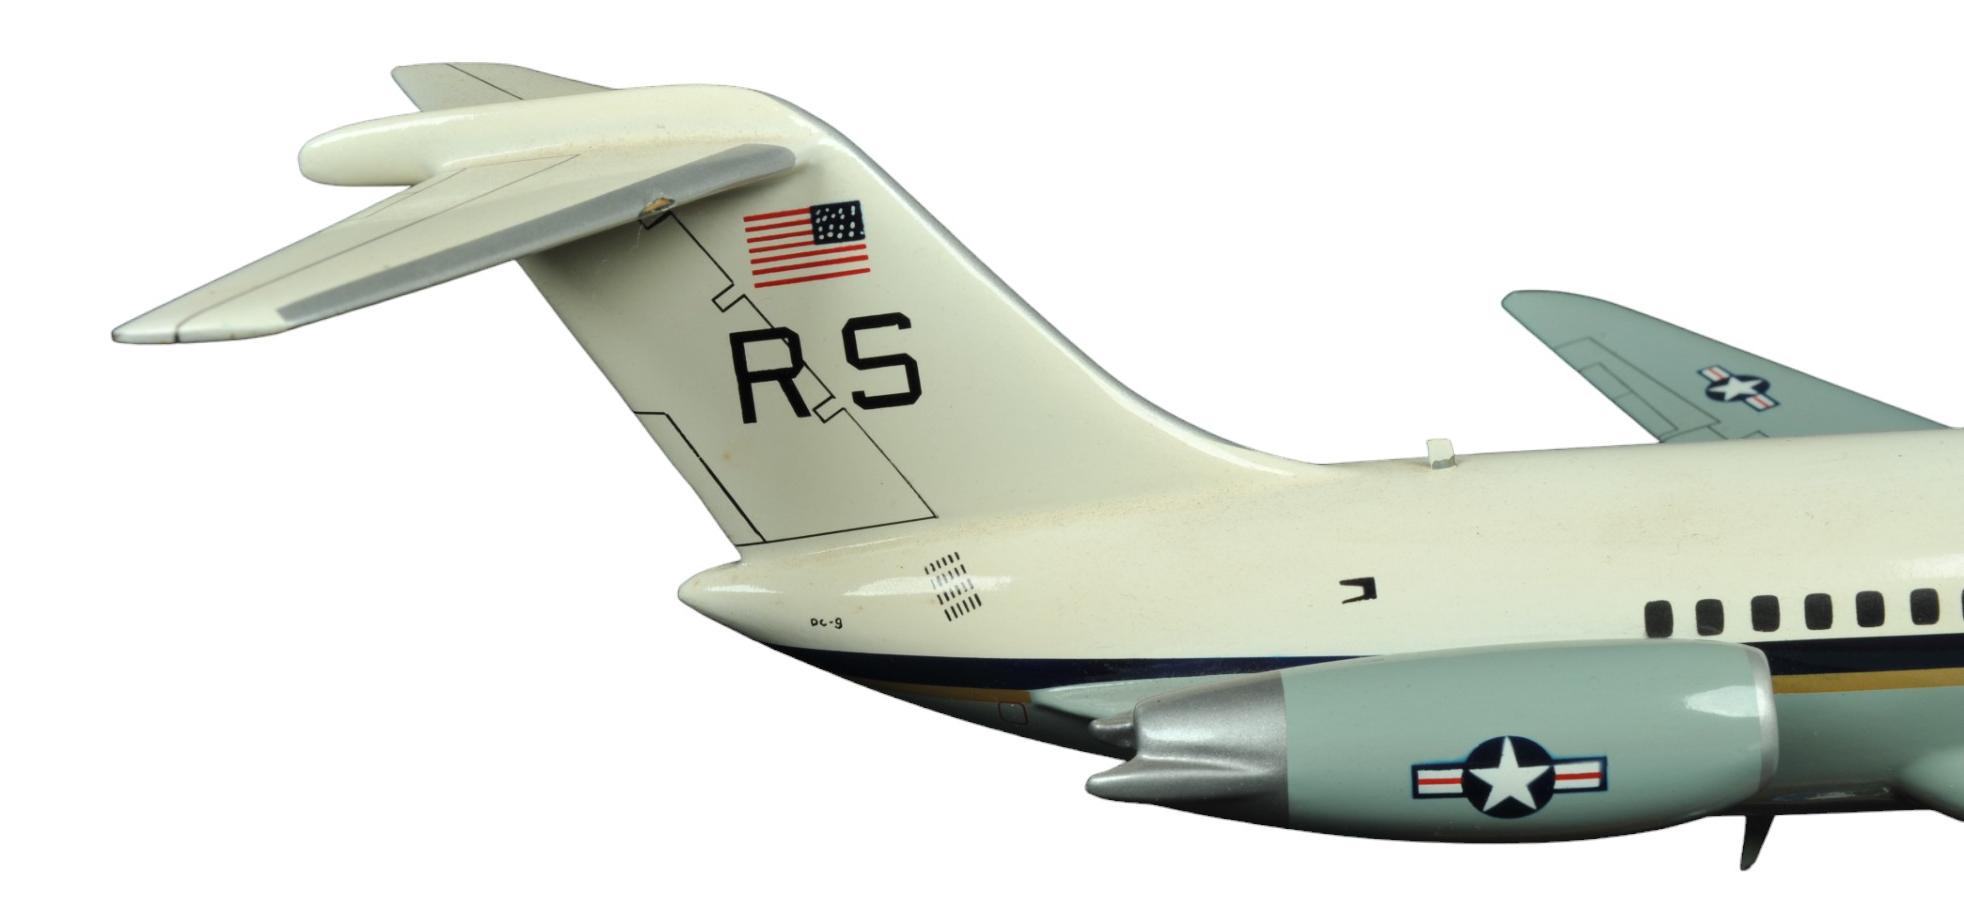 US Navy VR-C1 Squadron C9 Jet Factory Model (KDW)